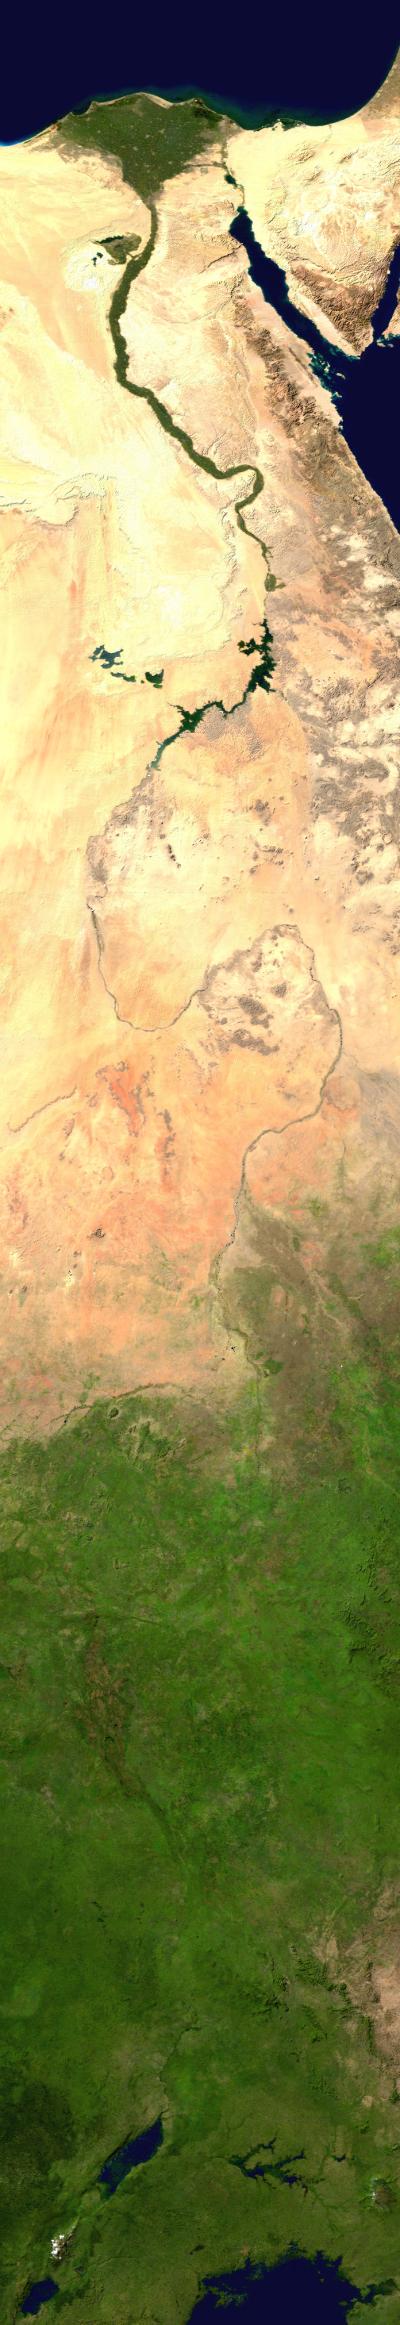 Nile composite NASA.jpg